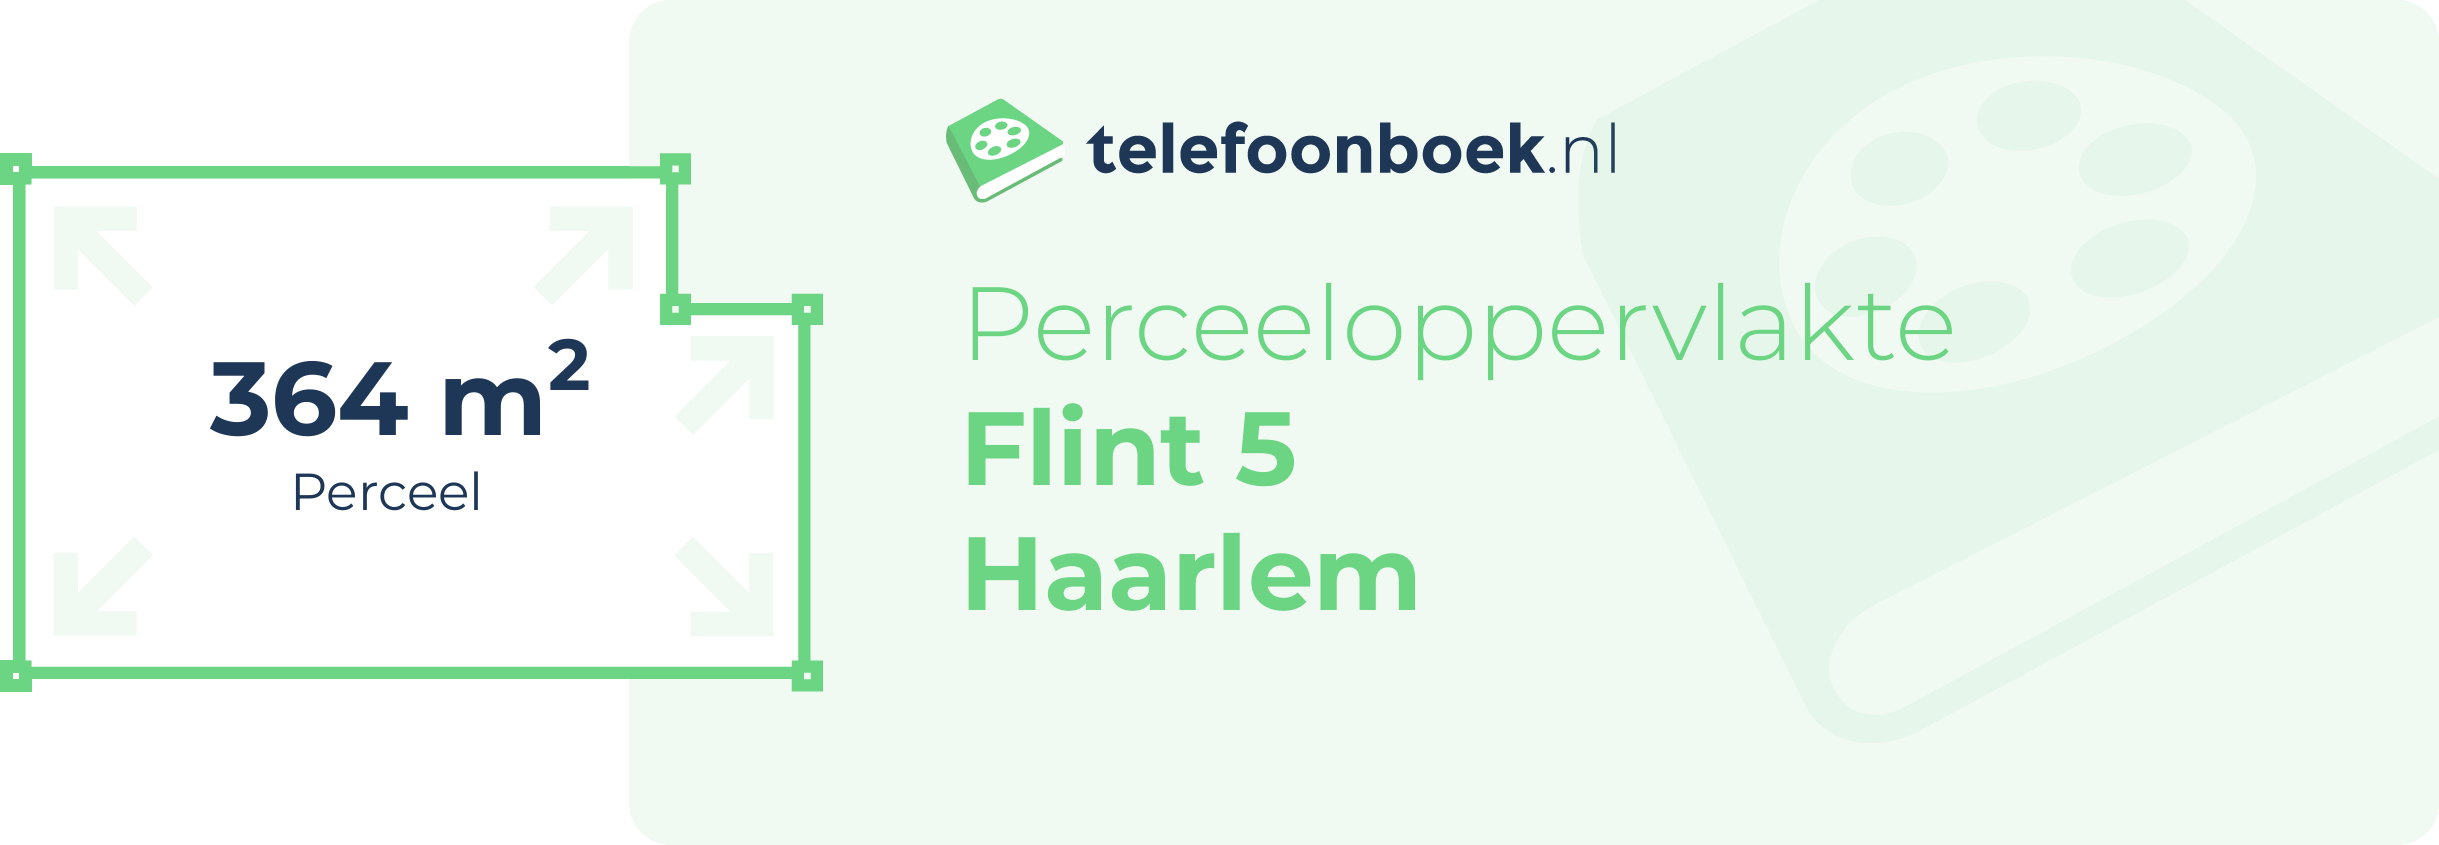 Perceeloppervlakte Flint 5 Haarlem